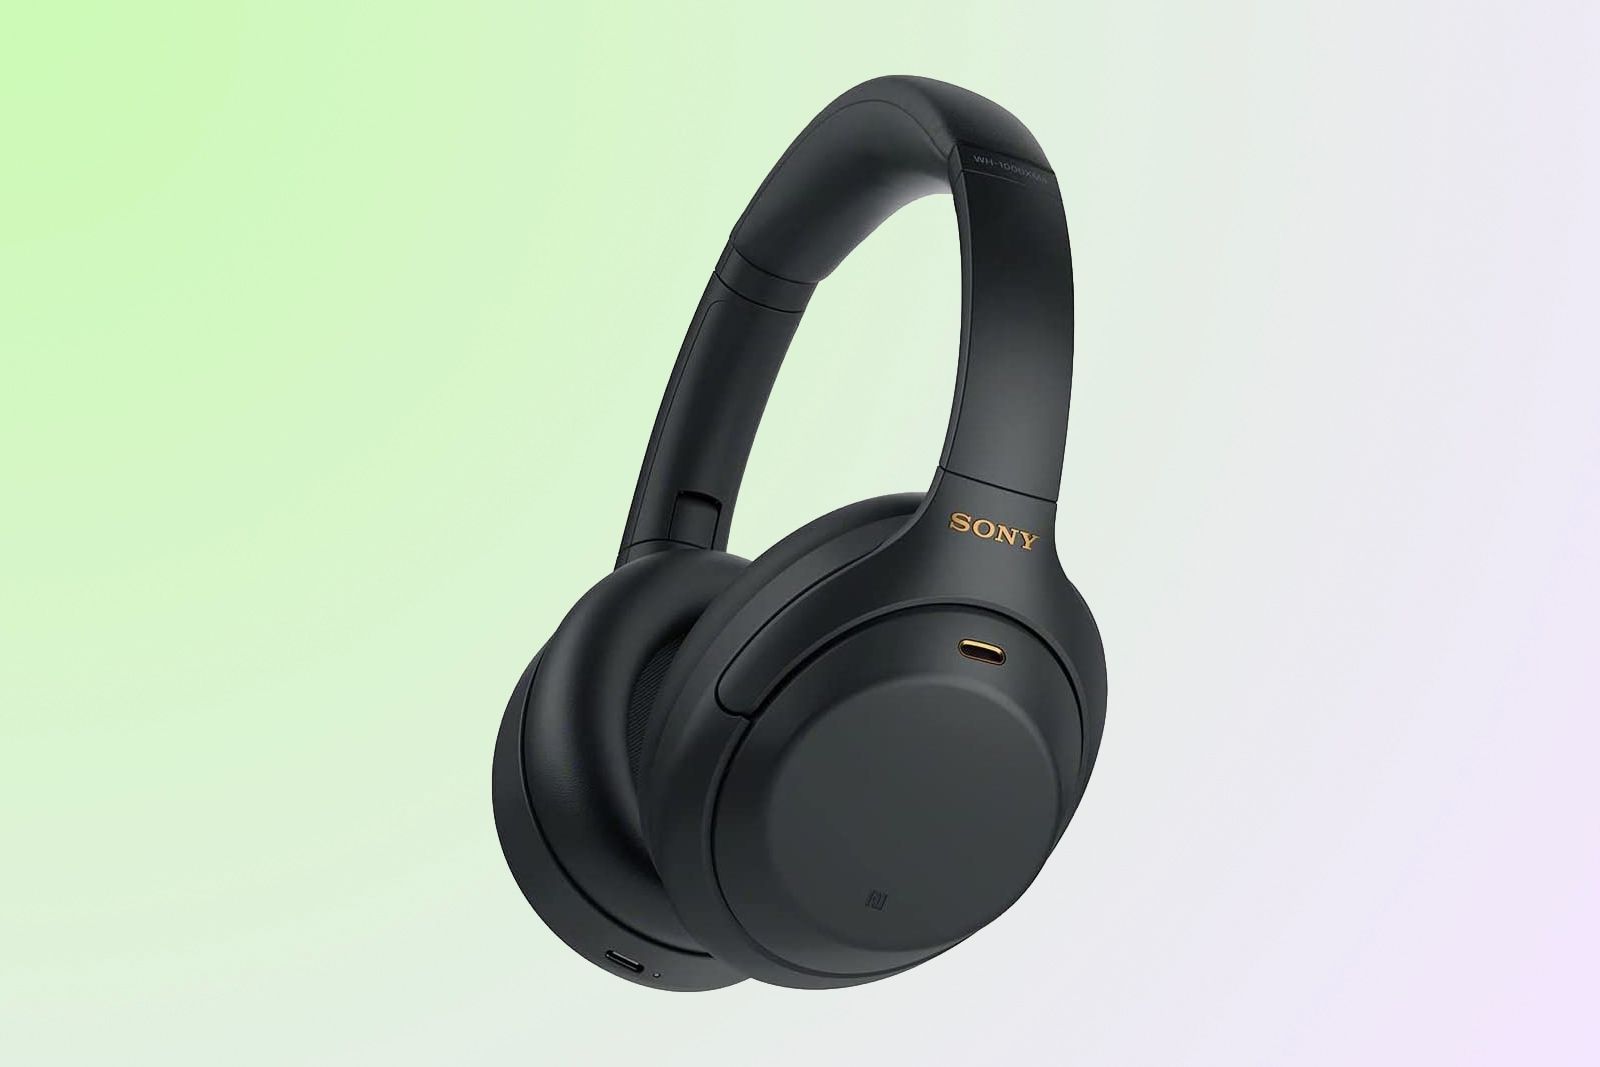 Black Sony headphones on a greenish-blue background.